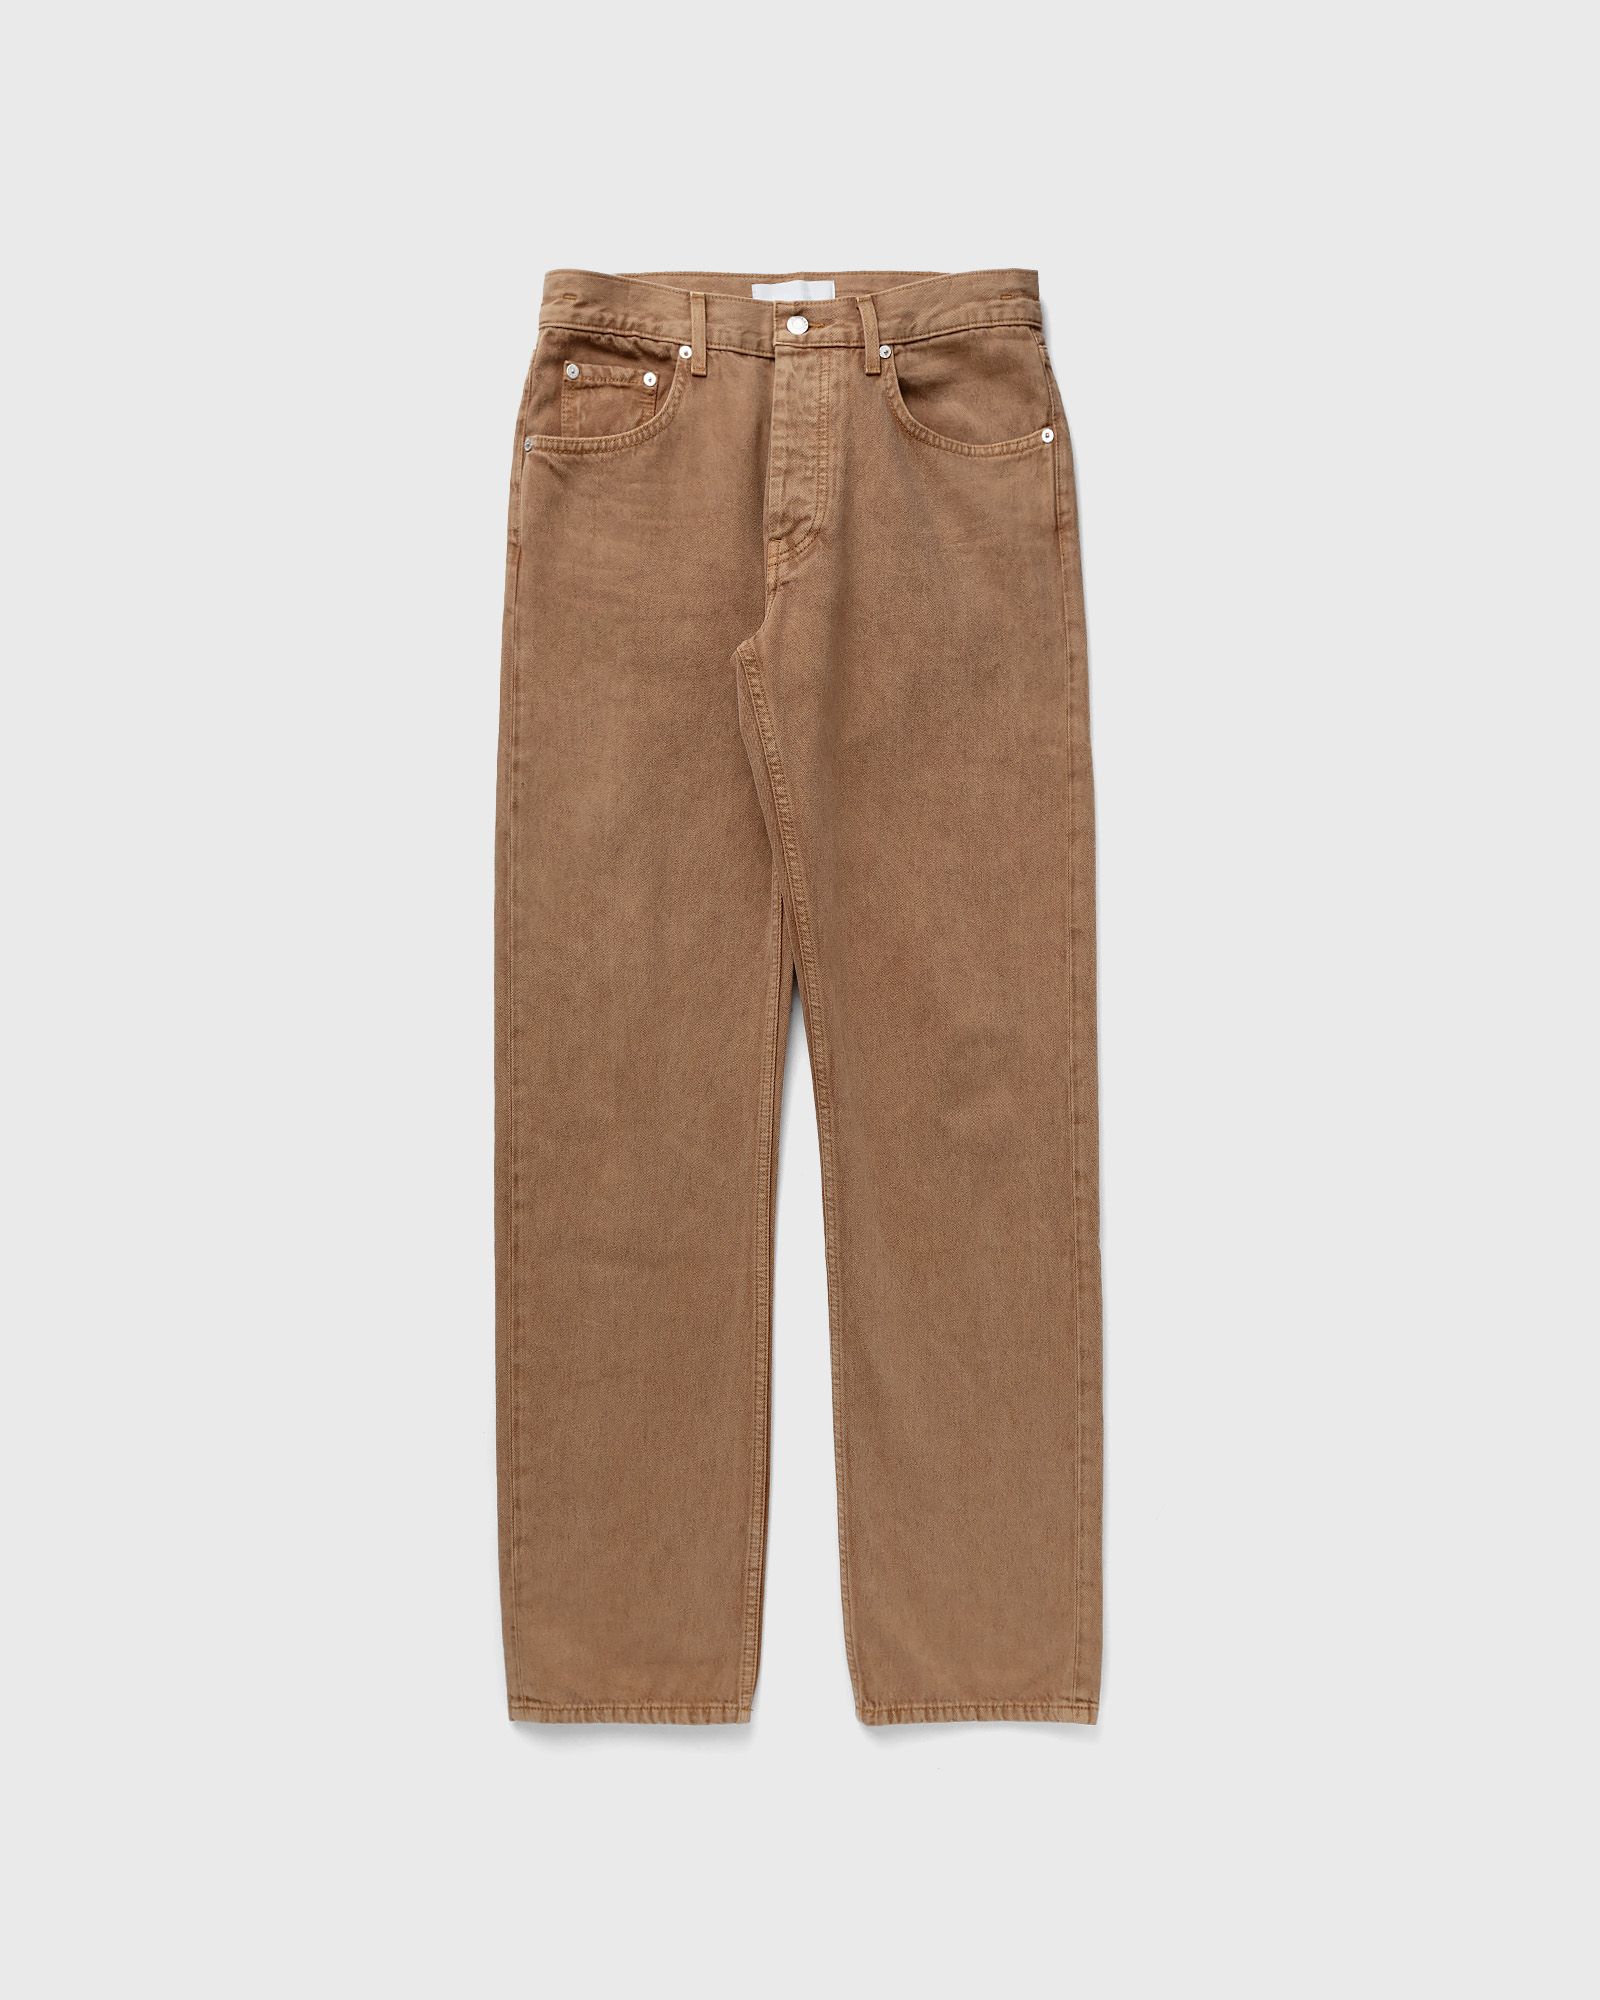 Helmut Lang - 98 classic men jeans brown in größe:xxl